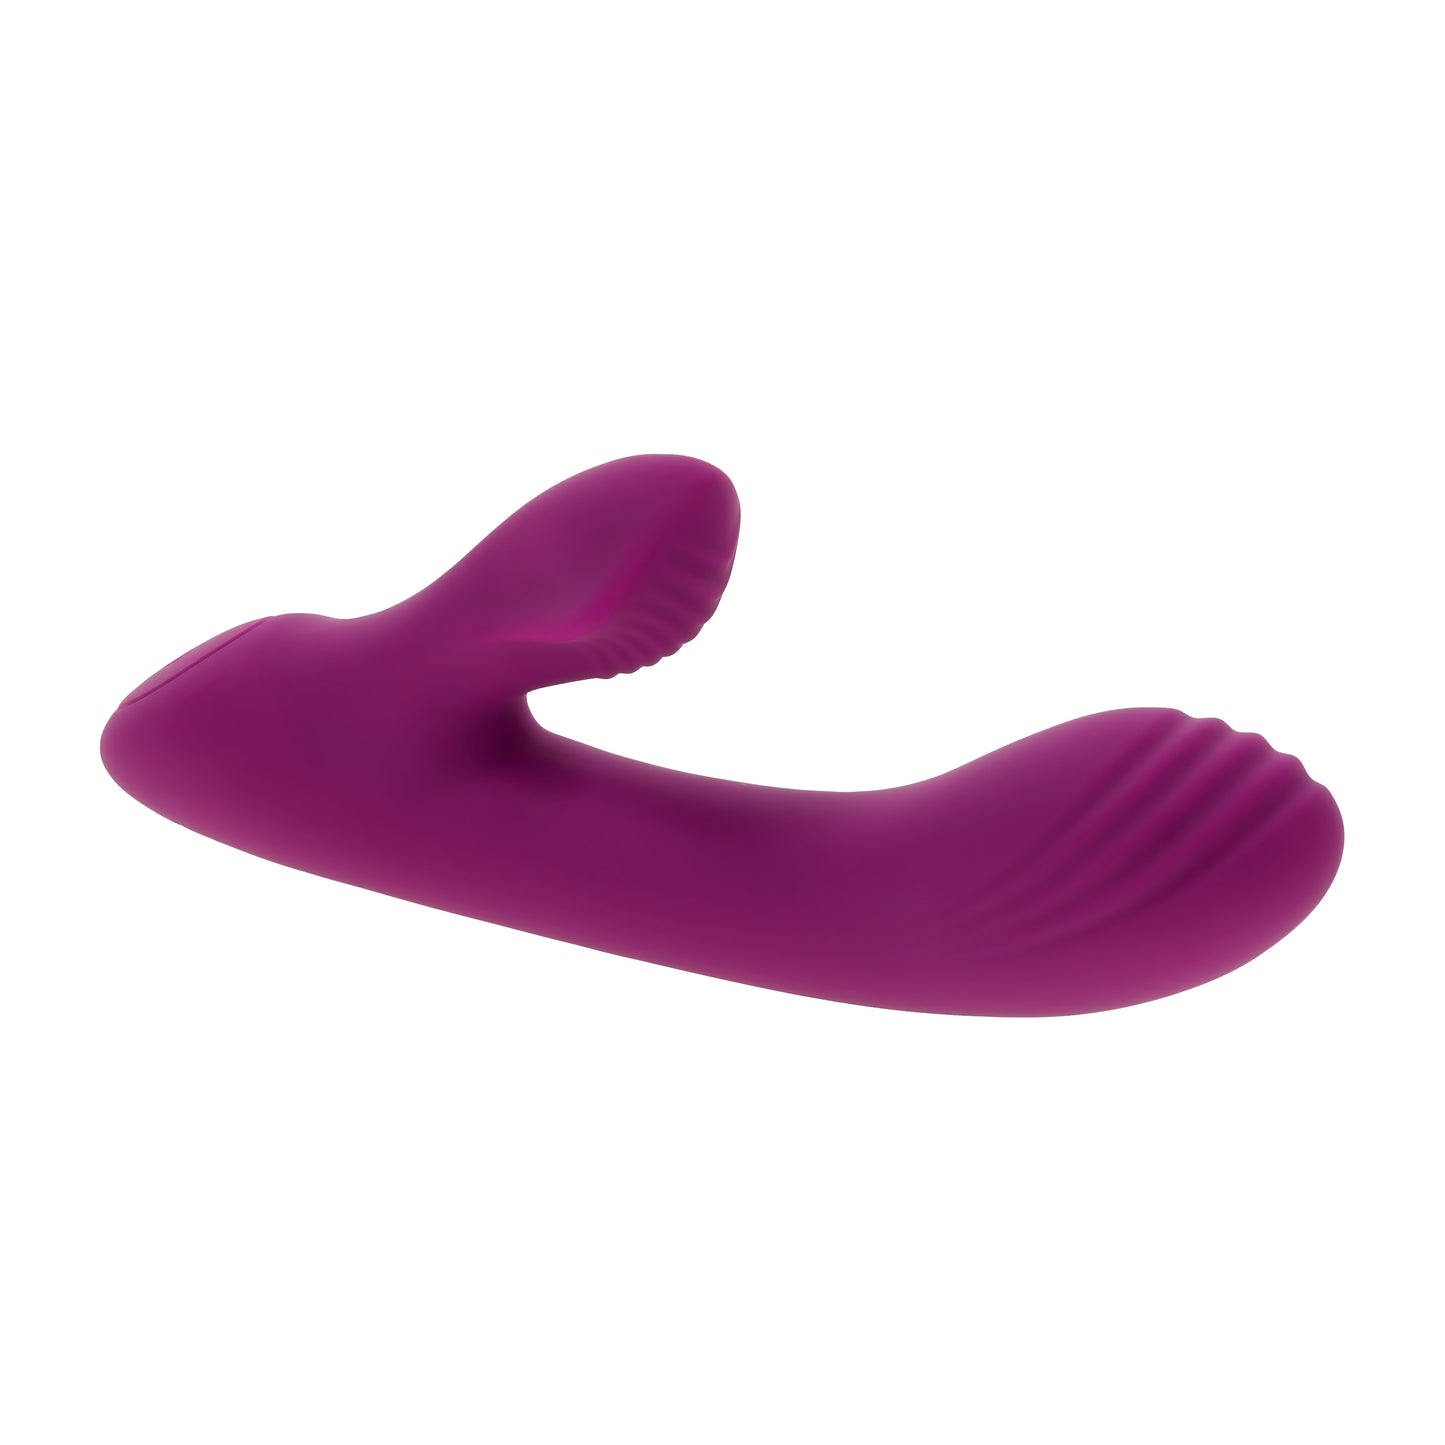 My Temptations Ladies Sex Toys Online